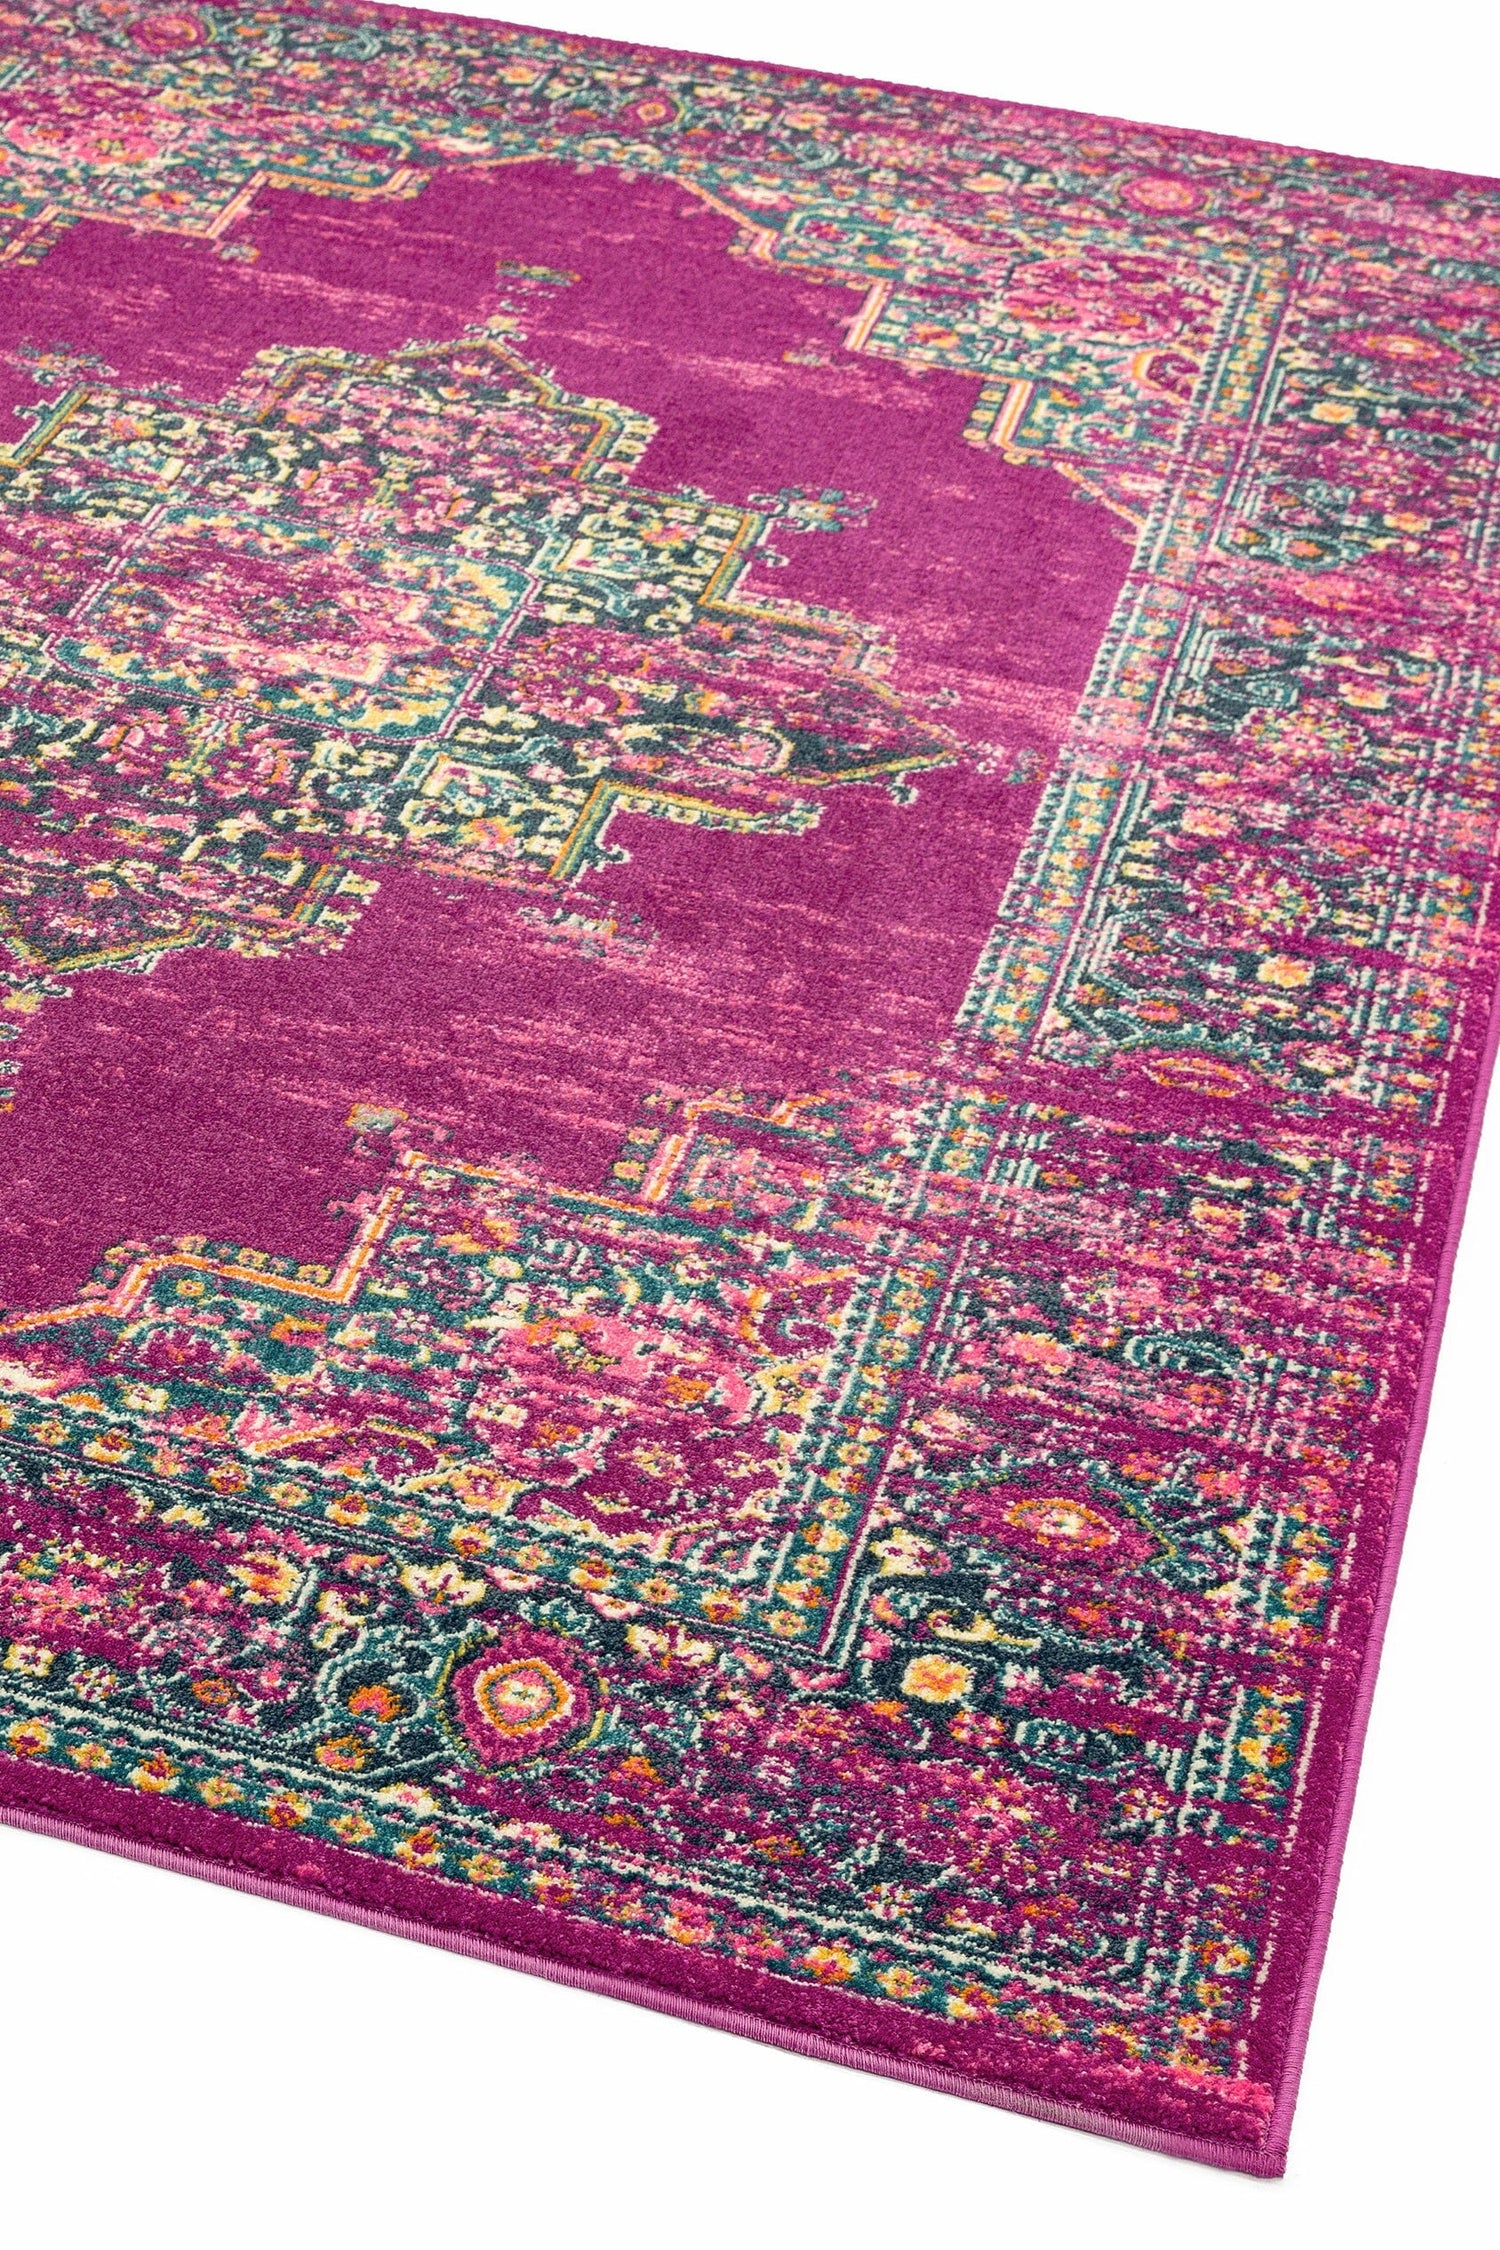  Asiatic Carpets-Asiatic Carpets Colt Machine Woven Rug Medallion Fuchsia - 160 x 230cm-Multicoloured 613 